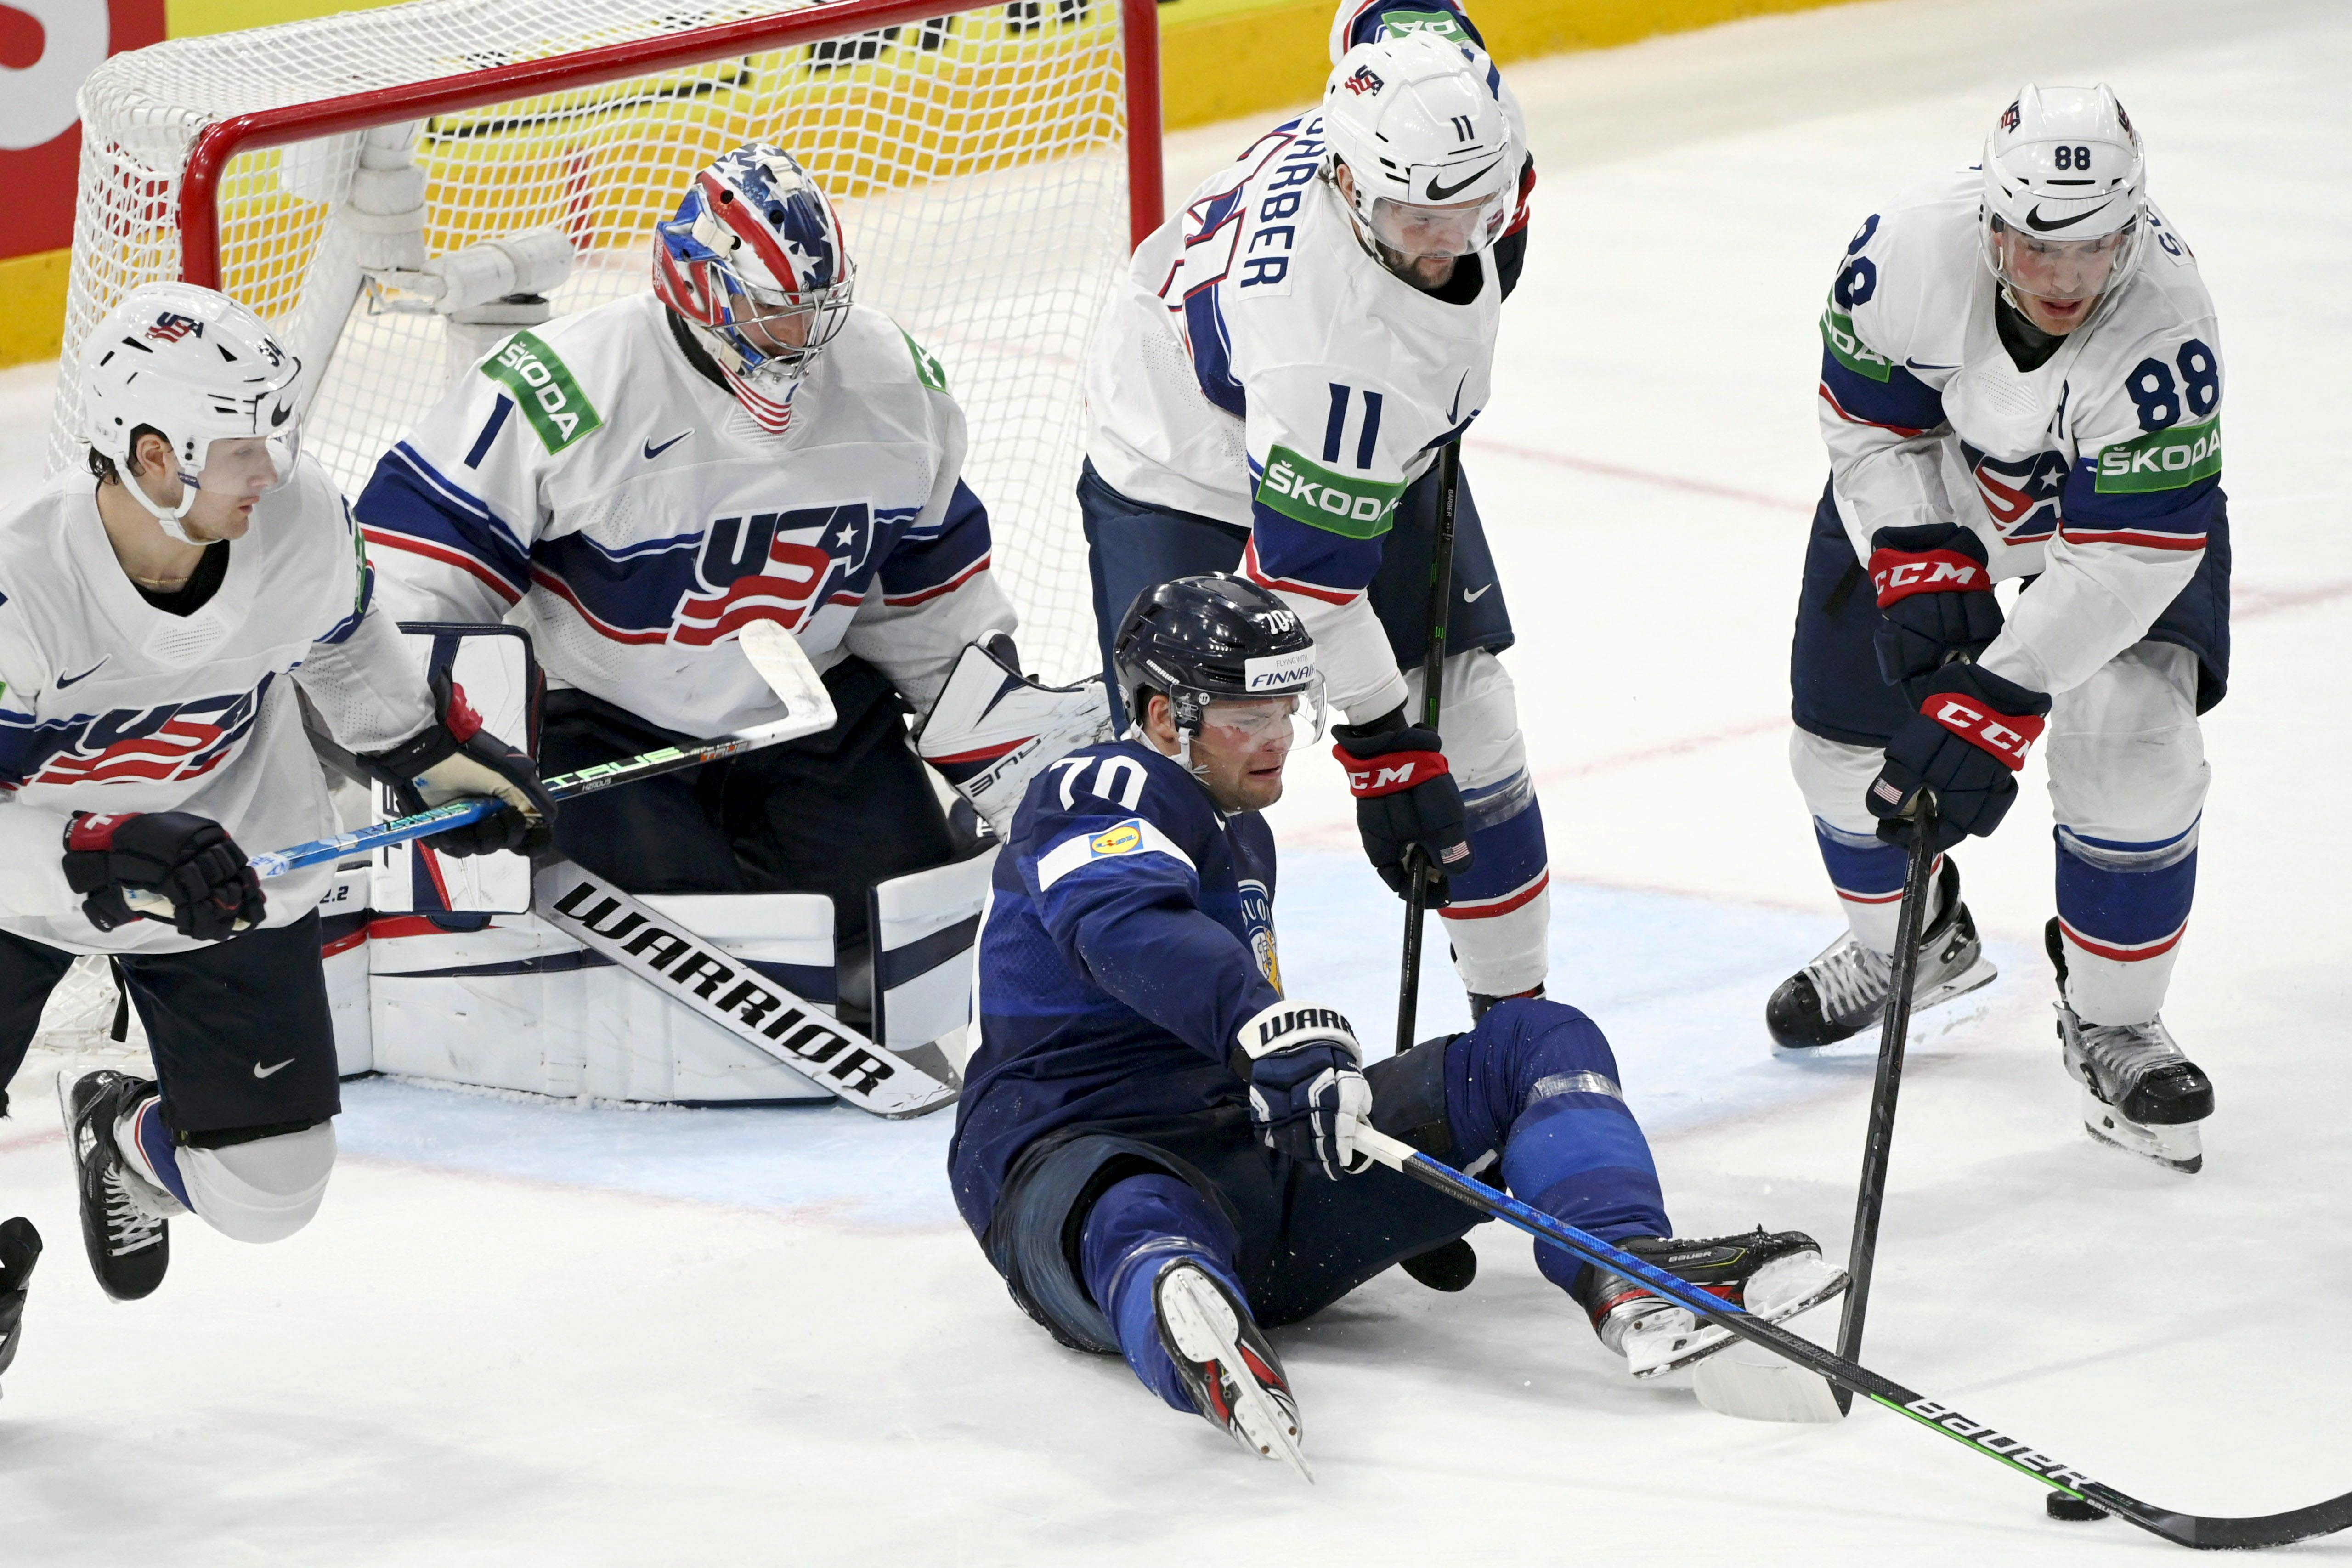 U.S. men's hockey team makes semis at world championship, eyes best finish  since 1950 - NBC Sports